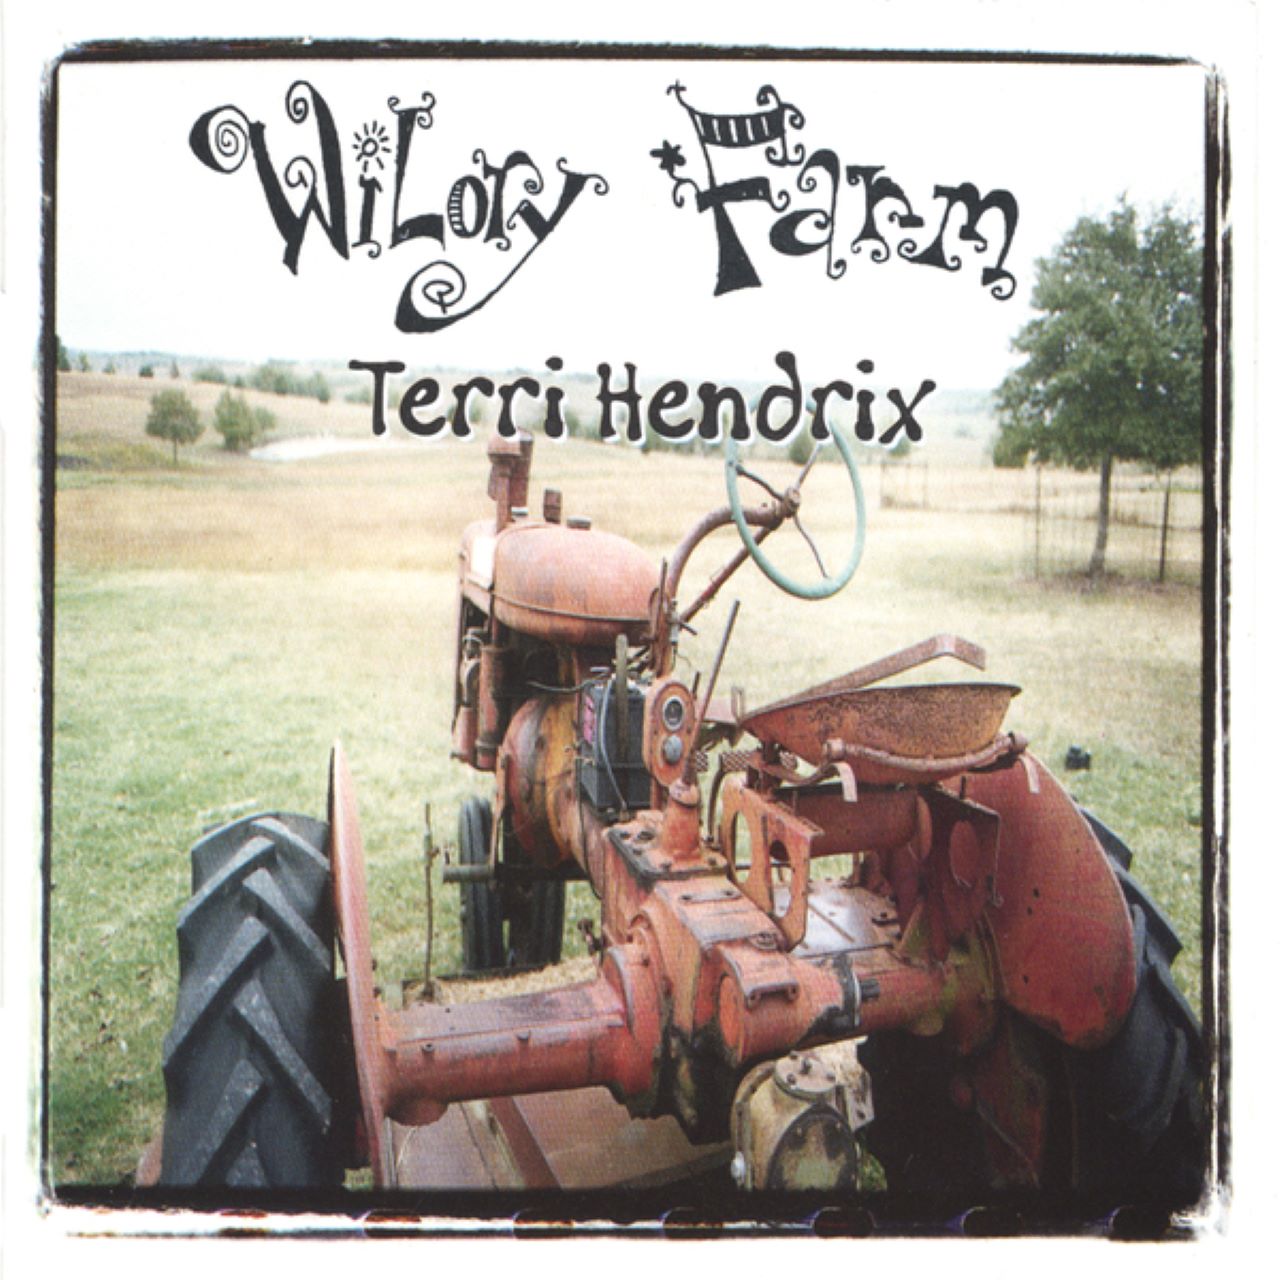 Terri Hendrix - Wilory Farm cover album